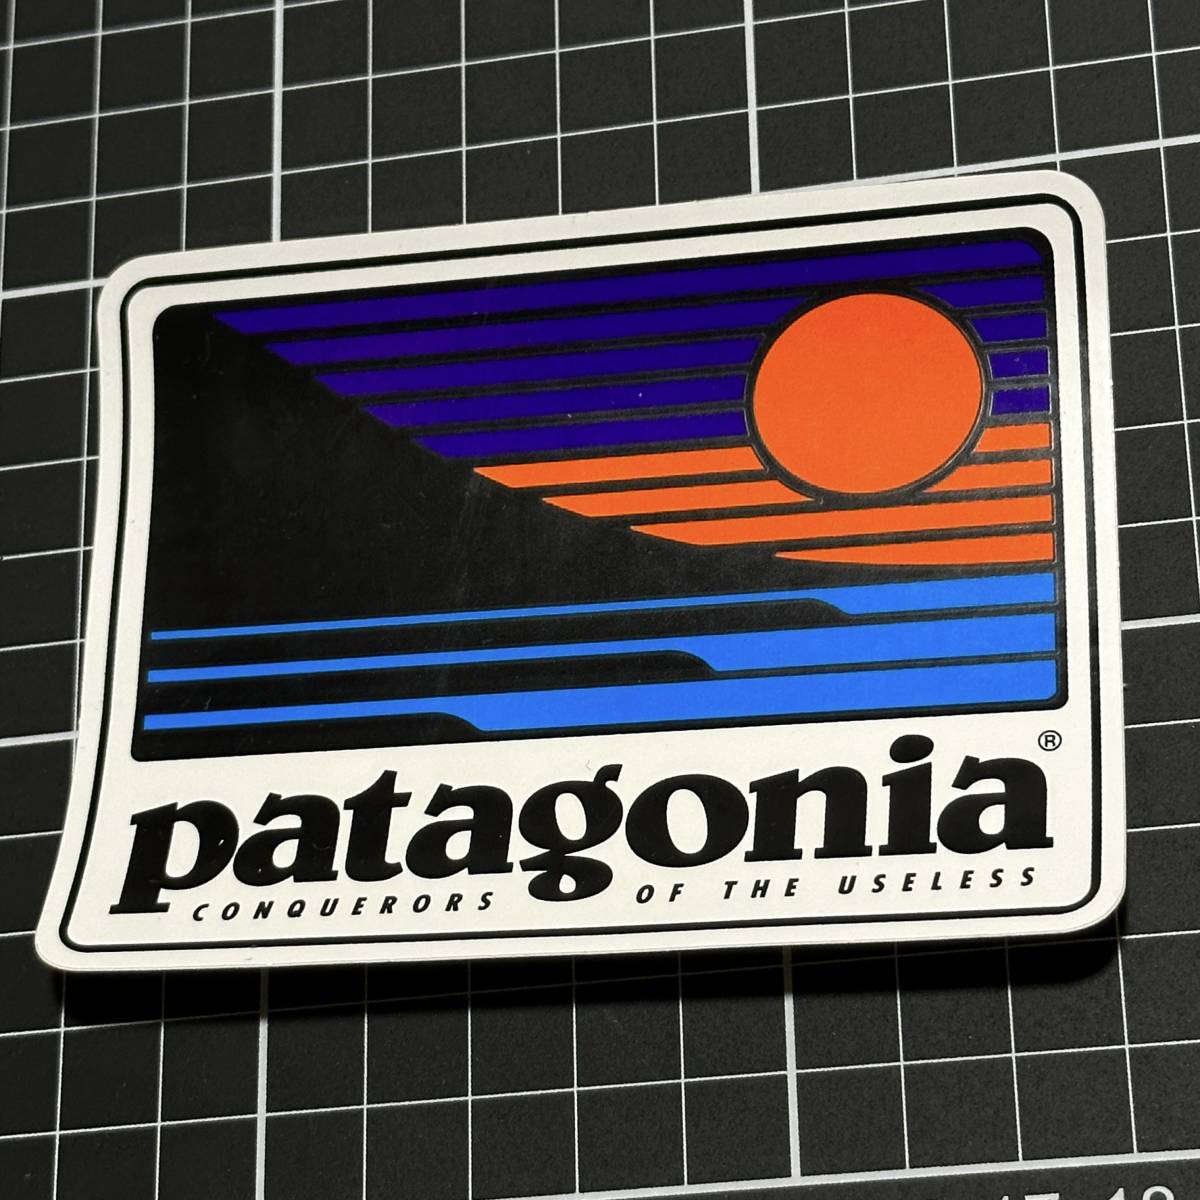  Patagonia [ movie 180 SOUTH ] sticker seal.